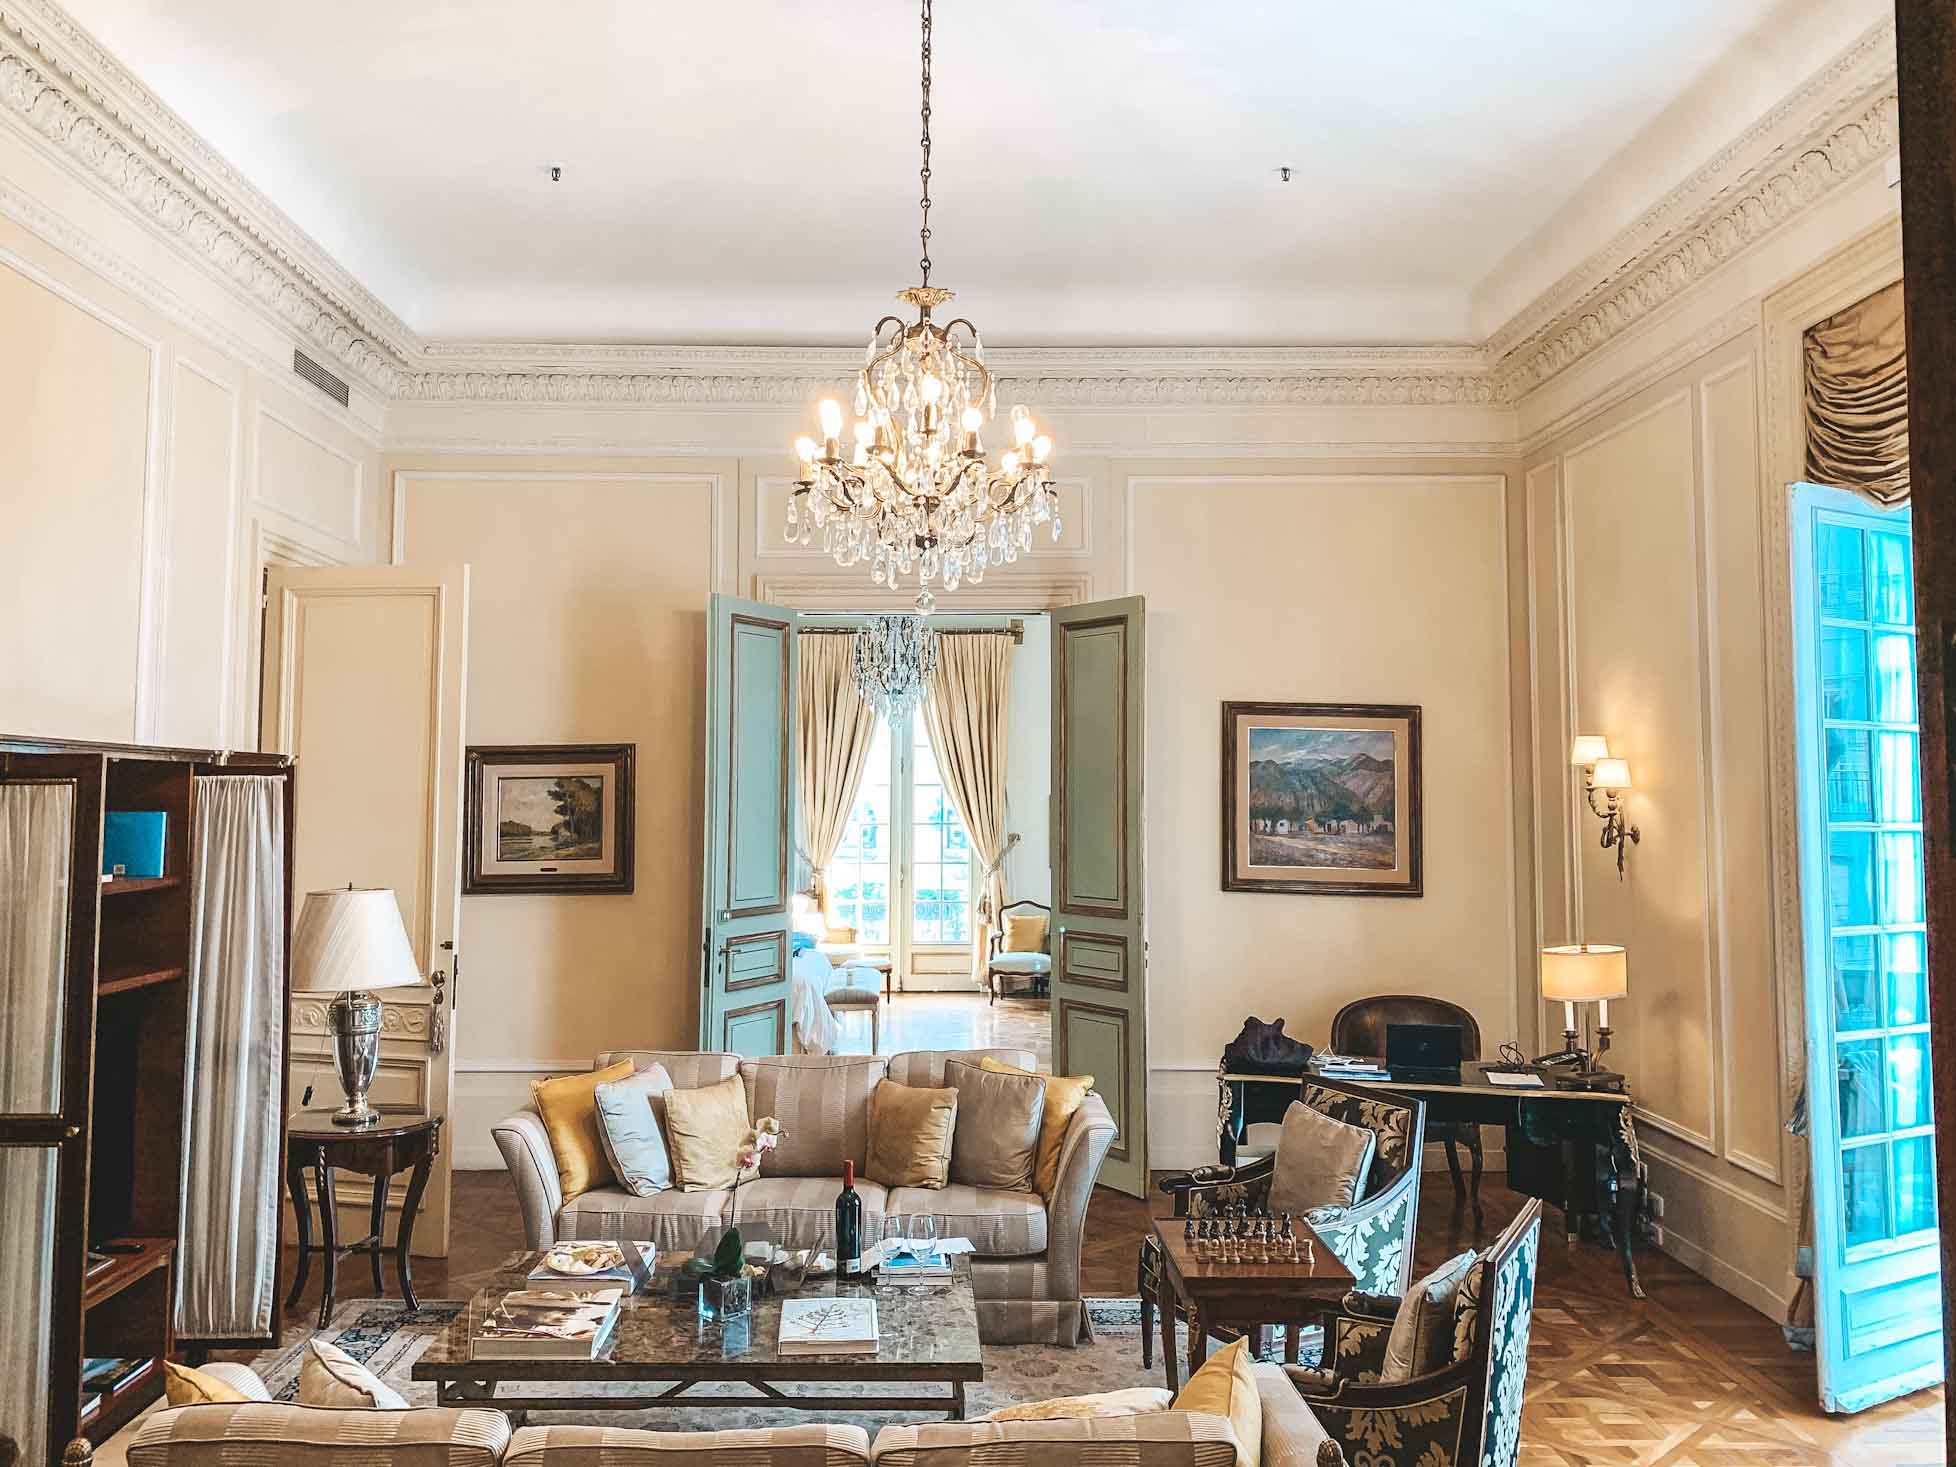 Suite Presidencial Four Seasons Buenos Aires - La Mansion 101 - o melhor hotel de Buenos Aires - Recoleta